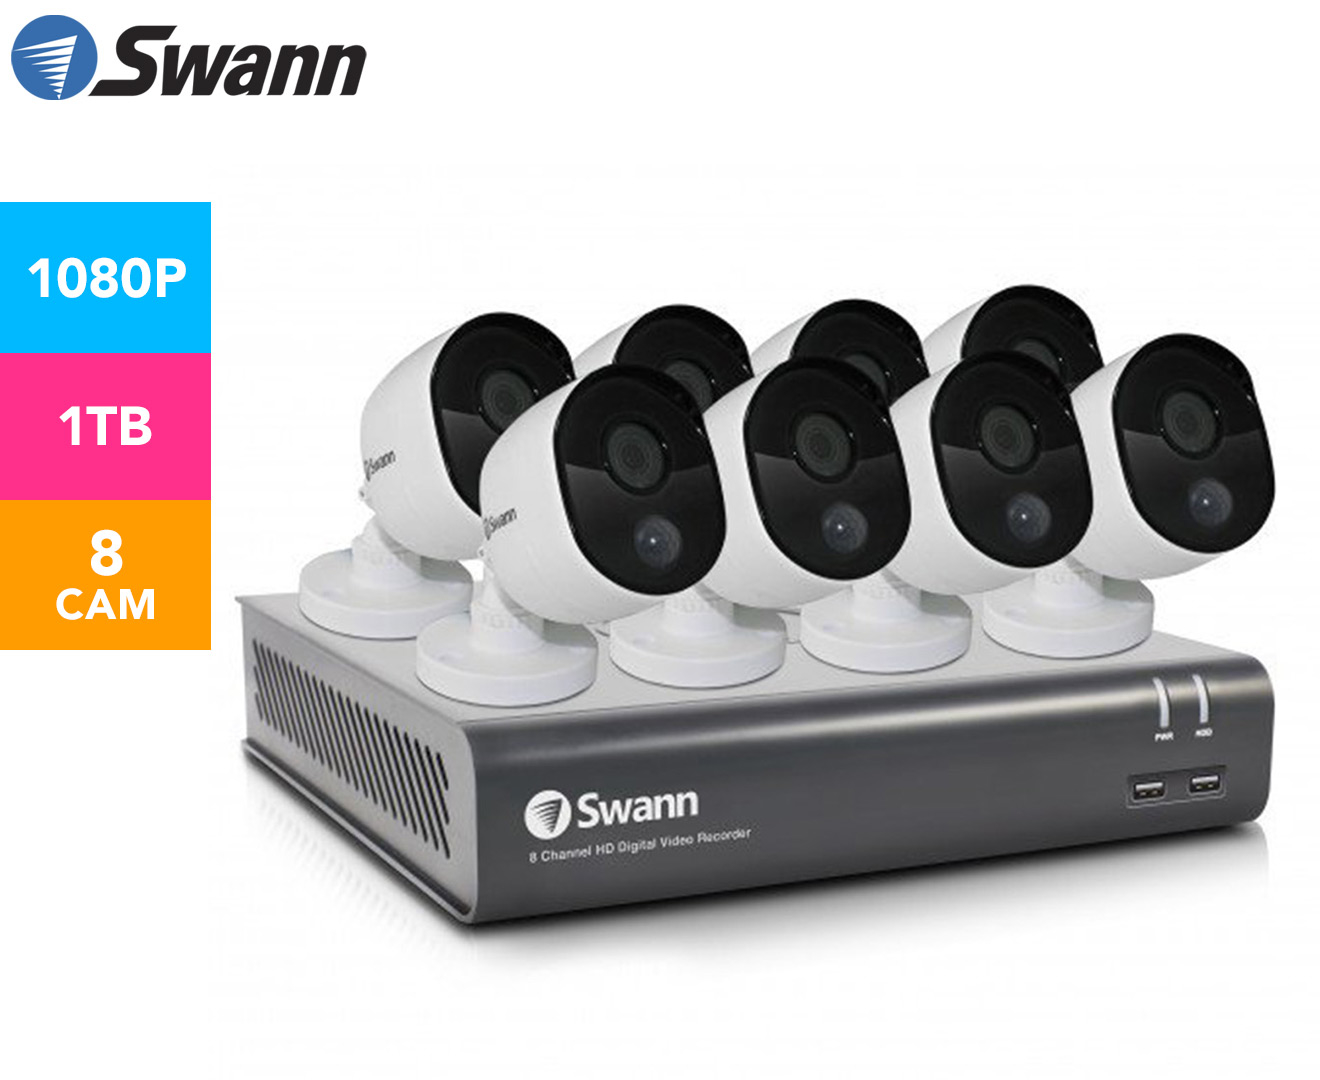 Swann Dvr8 4575 1tb Home Security System W 8 X Pro 1080msb Security Cameras Nz